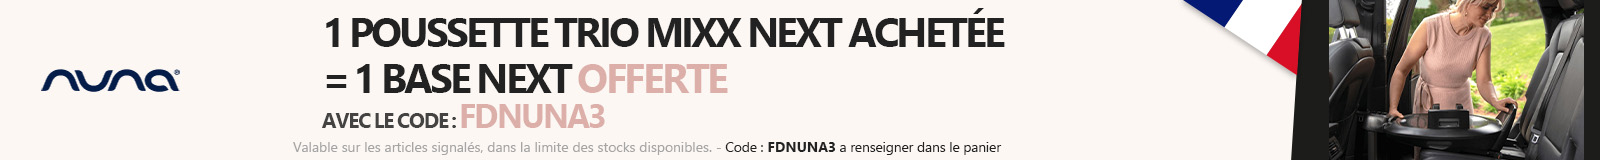 Nuna : Trio Mixx Next Nuna = base next